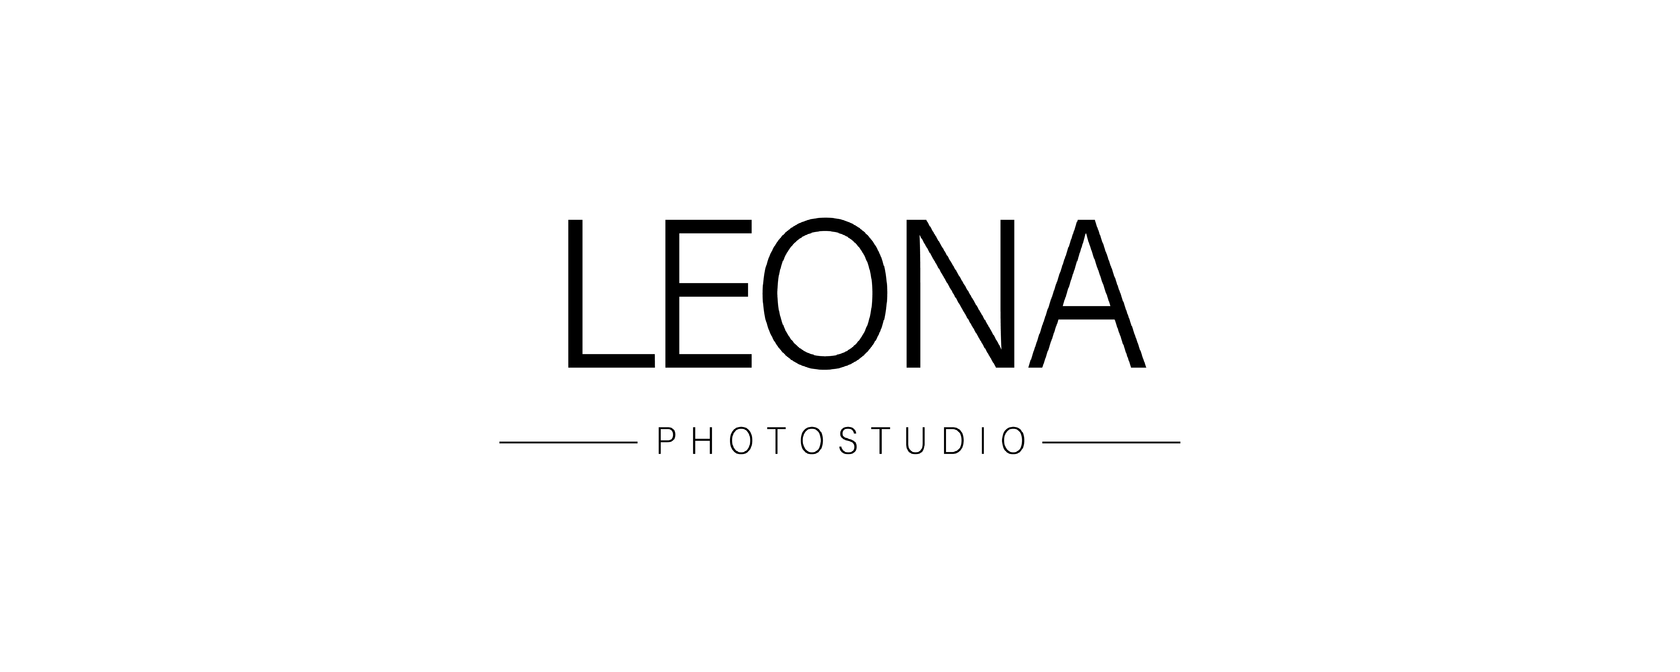 LEONA PHOTOSTUDIO